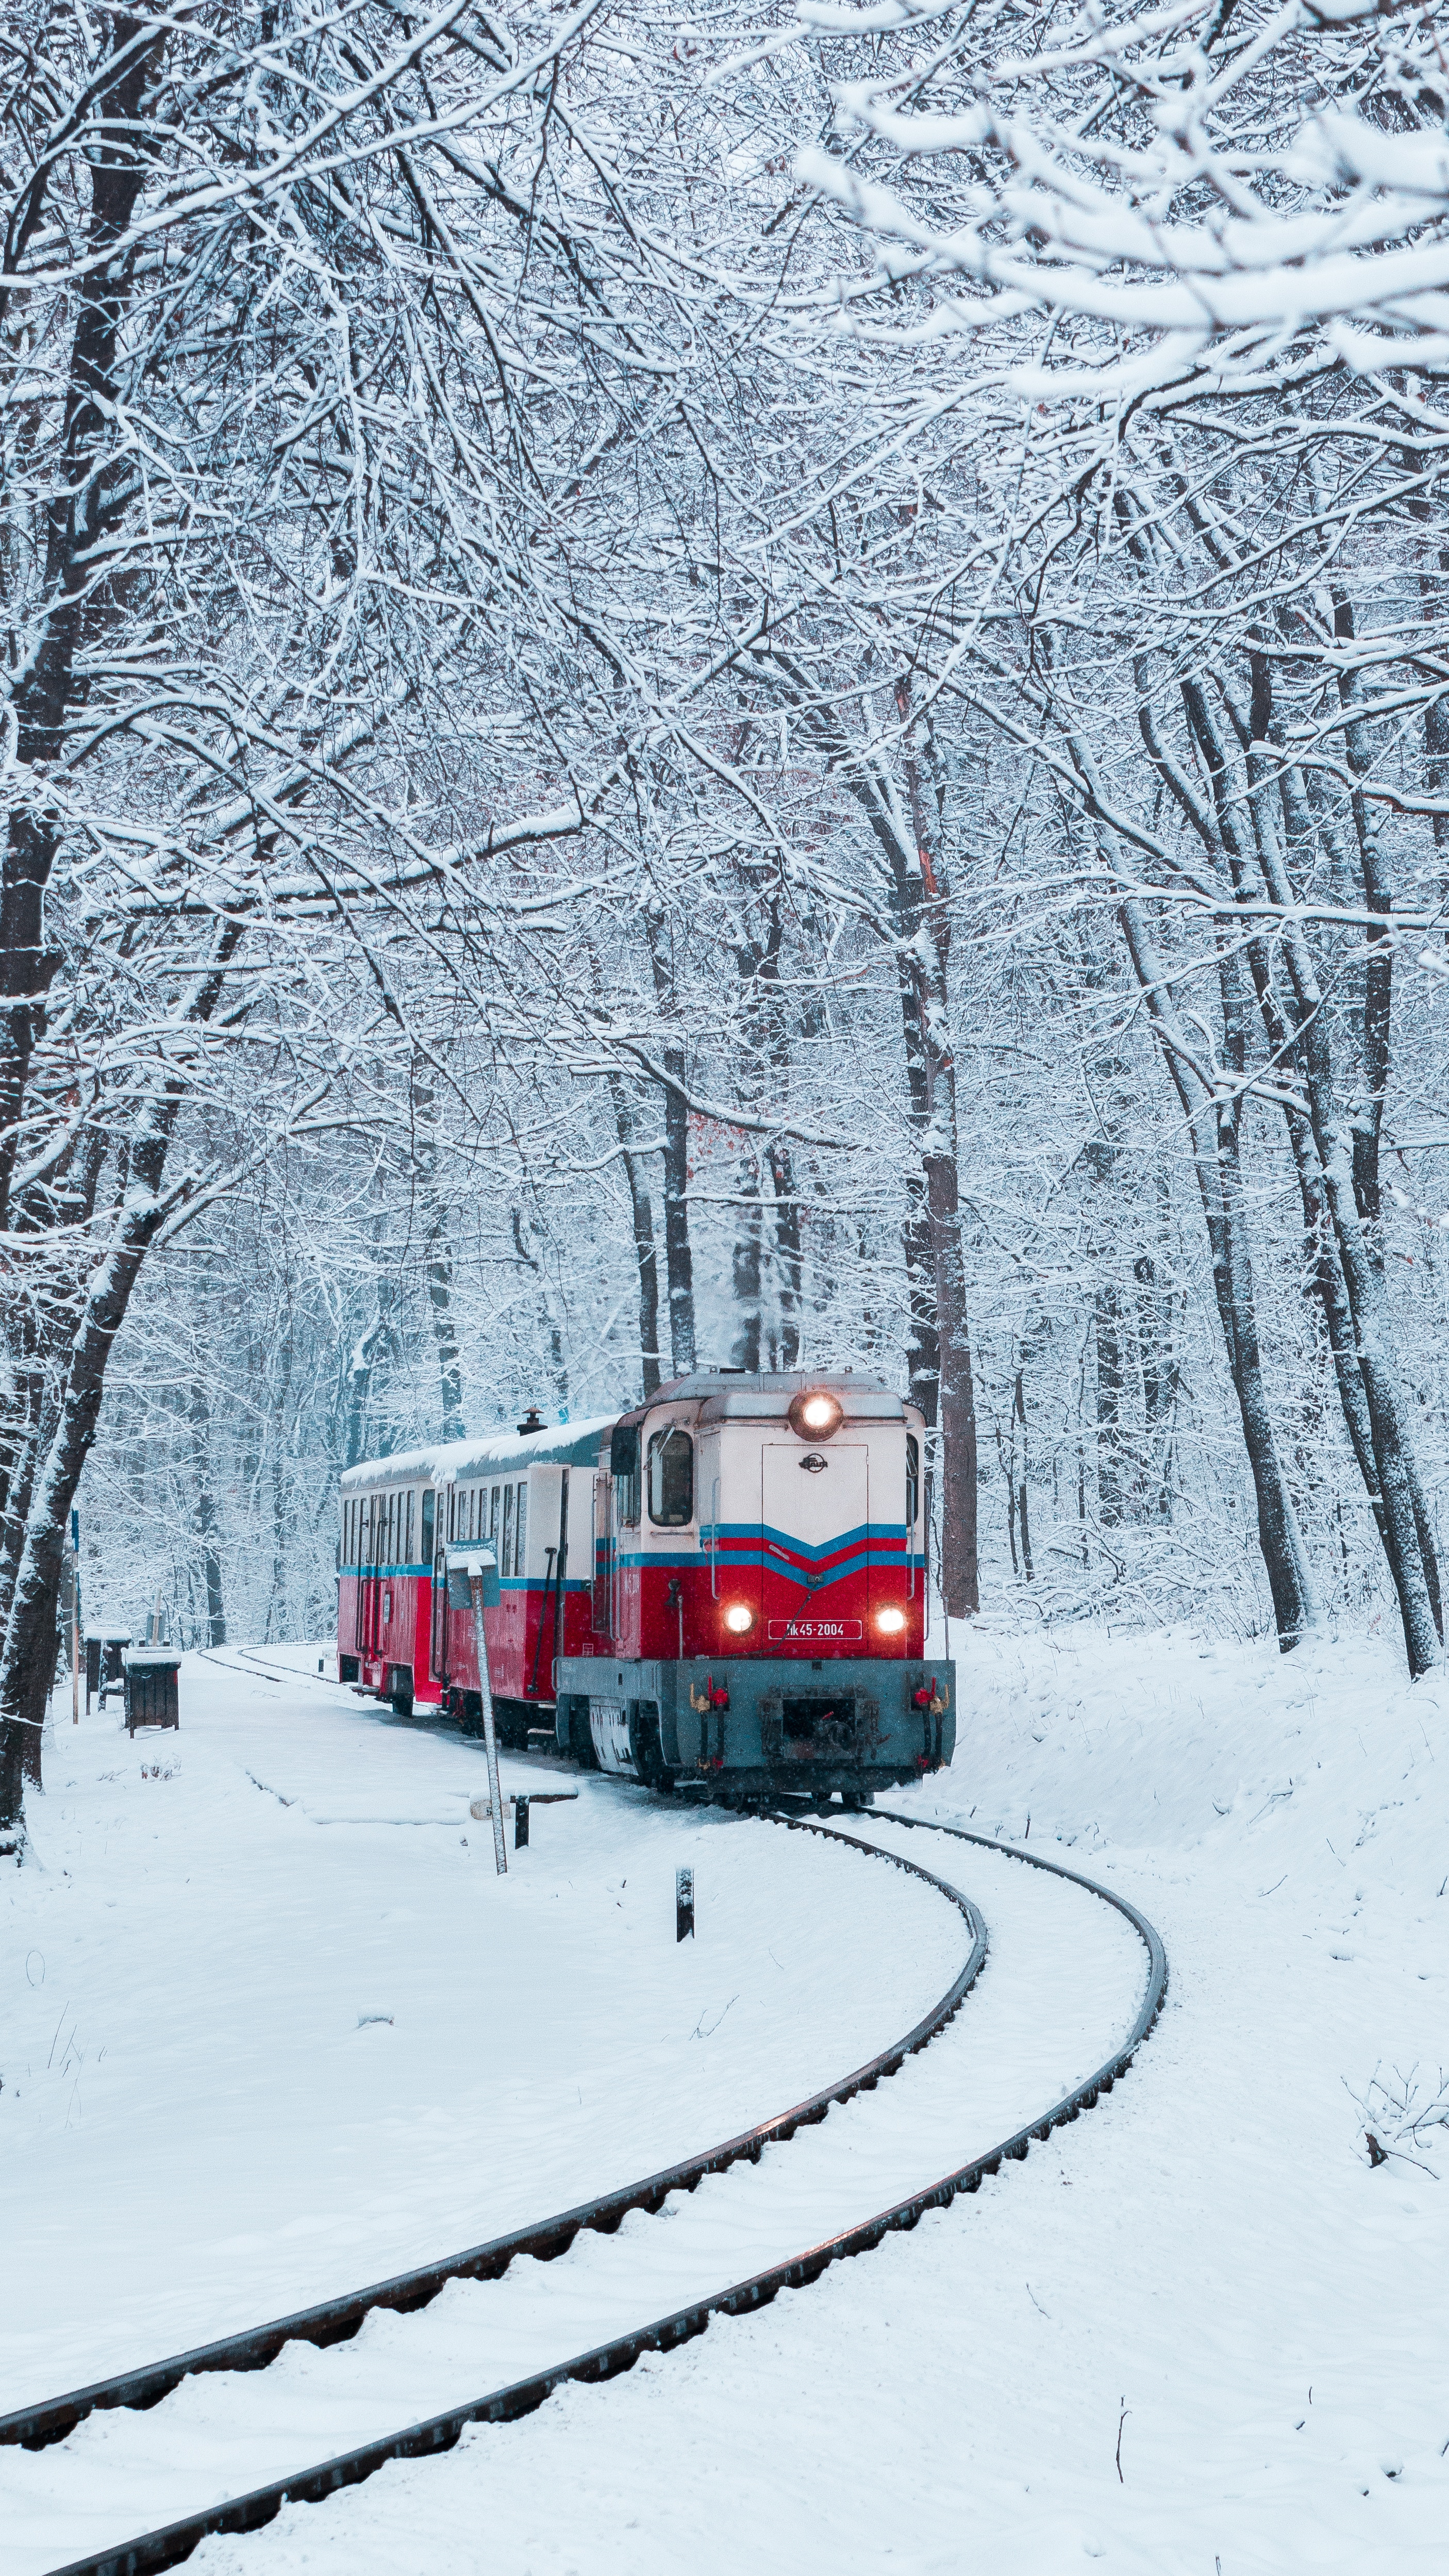 119280 descargar imagen naturaleza, nieve, bosque, ferrocarril, un tren, tren: fondos de pantalla y protectores de pantalla gratis